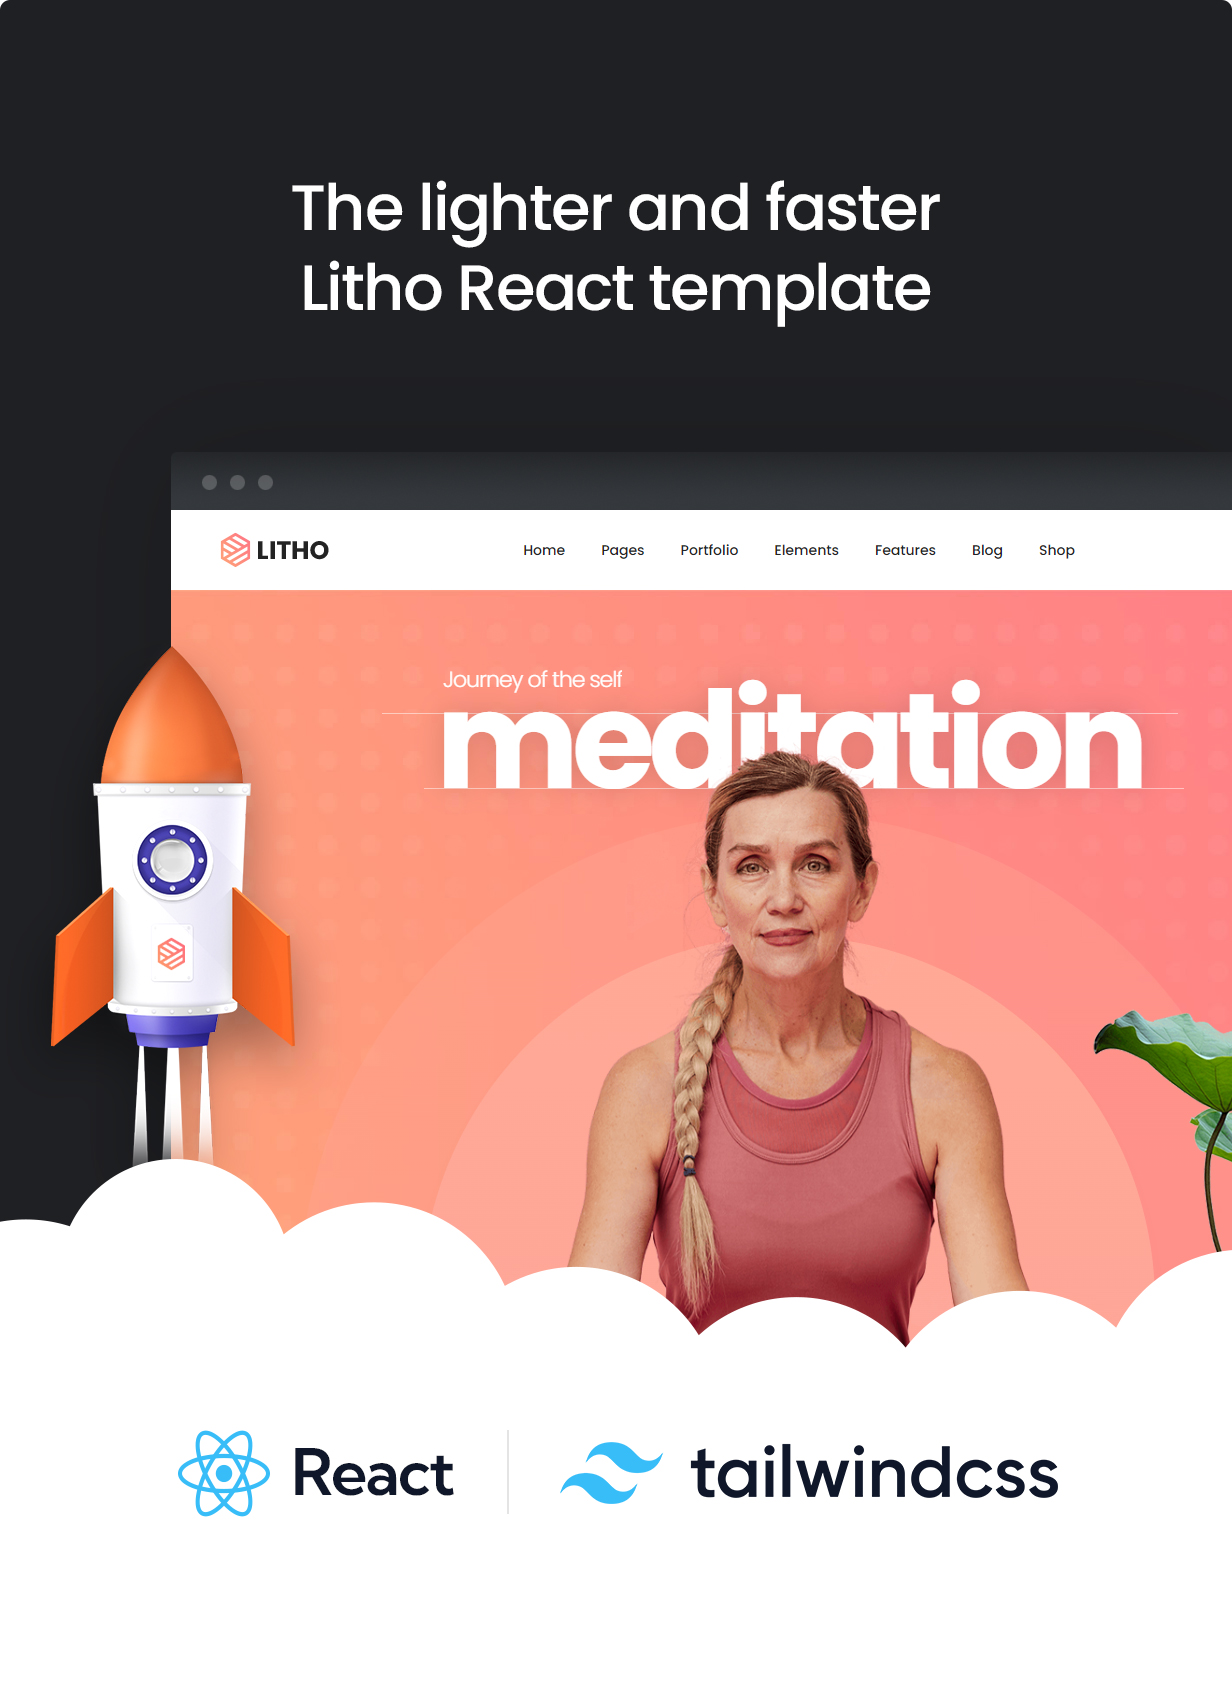 Litho - The Multipurpose React Template